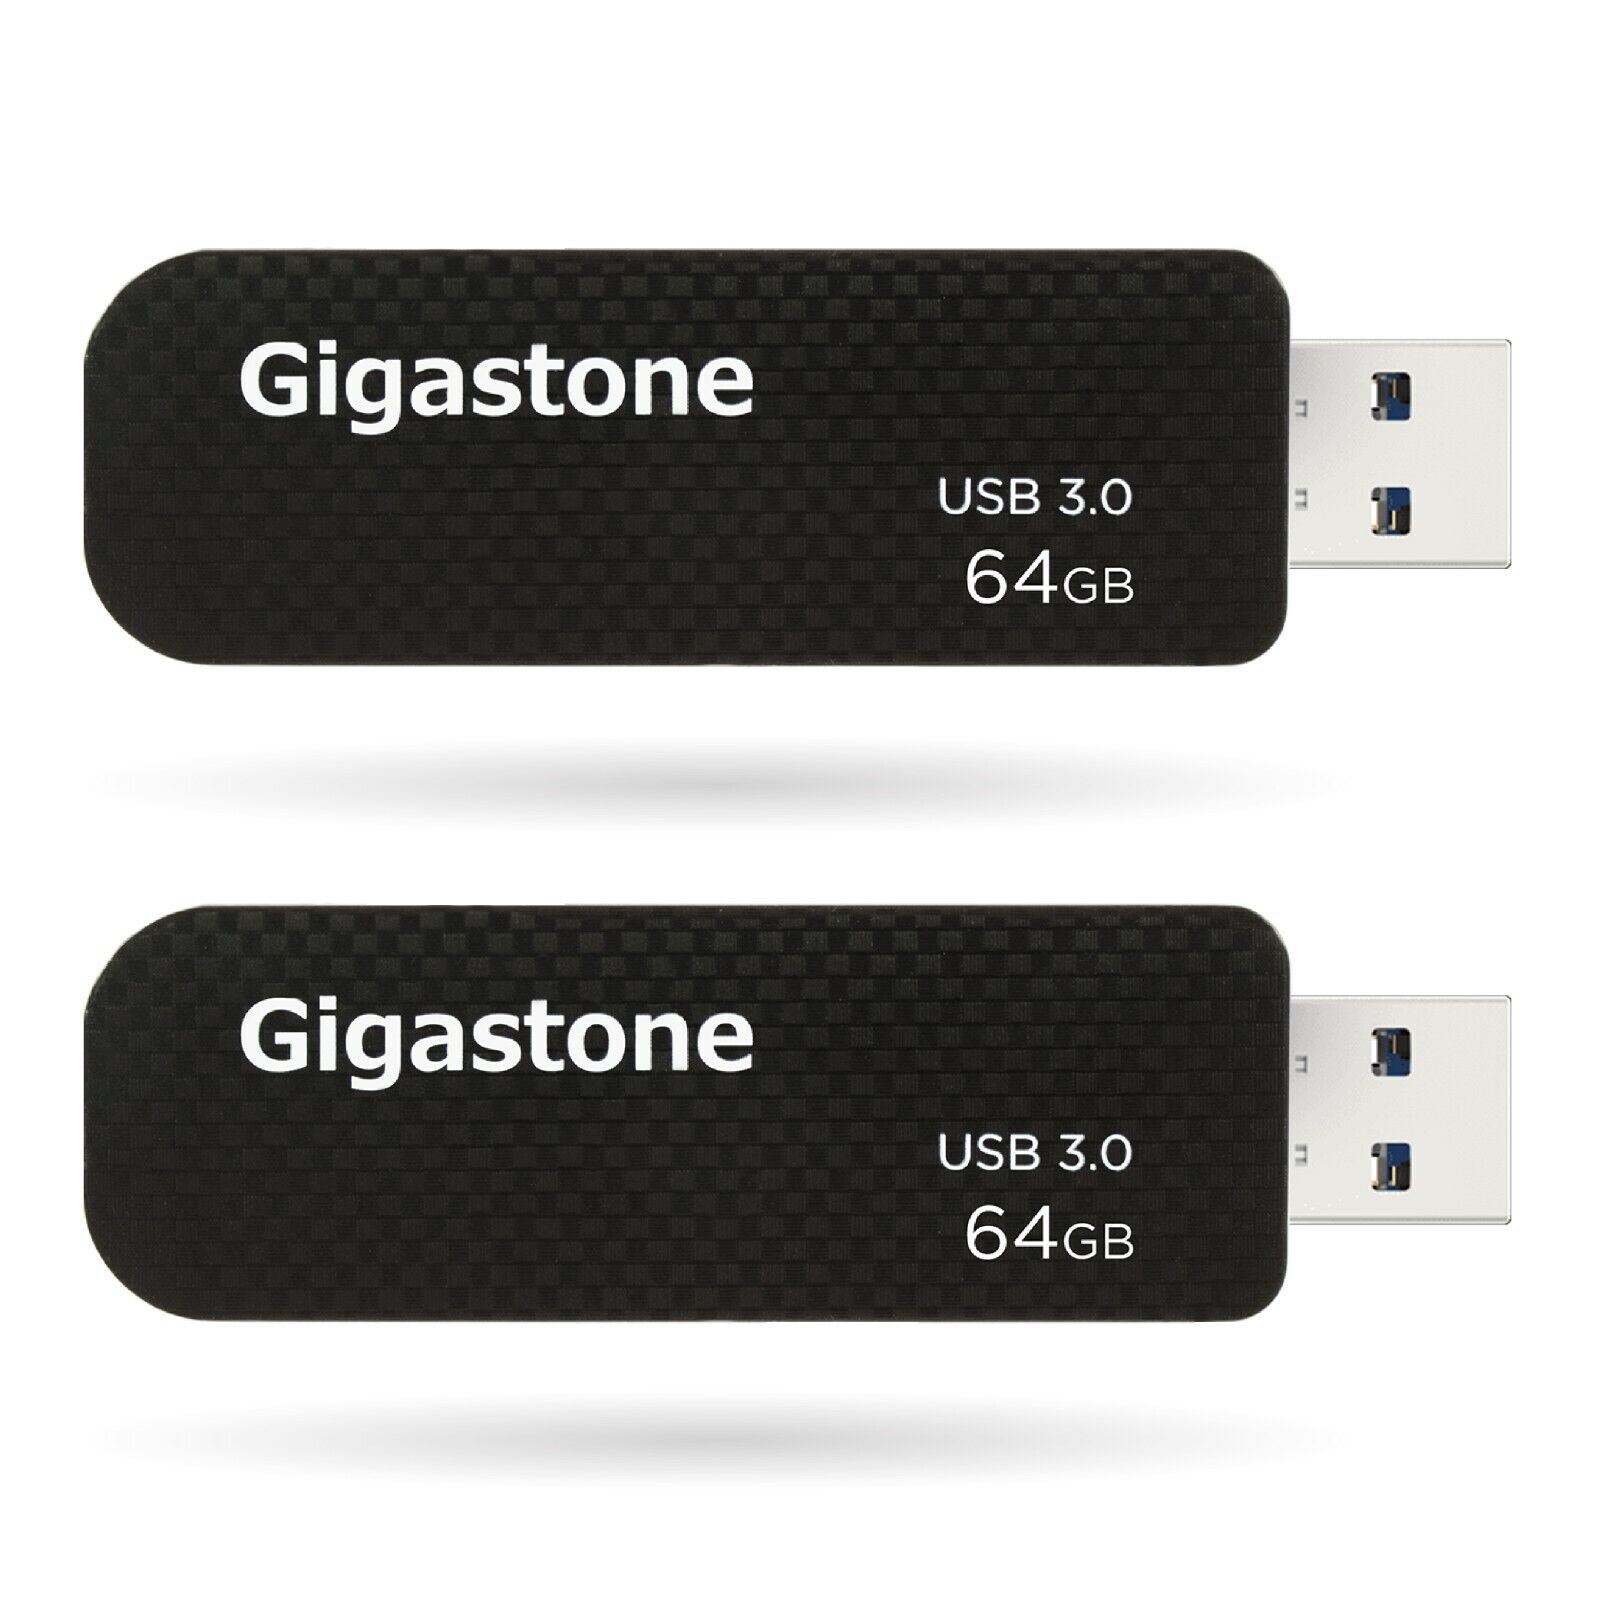 Gigastone USB 3.0 Flash Drives, 64GB, Black, Set Of 2 Flash Drives (2x64GB)